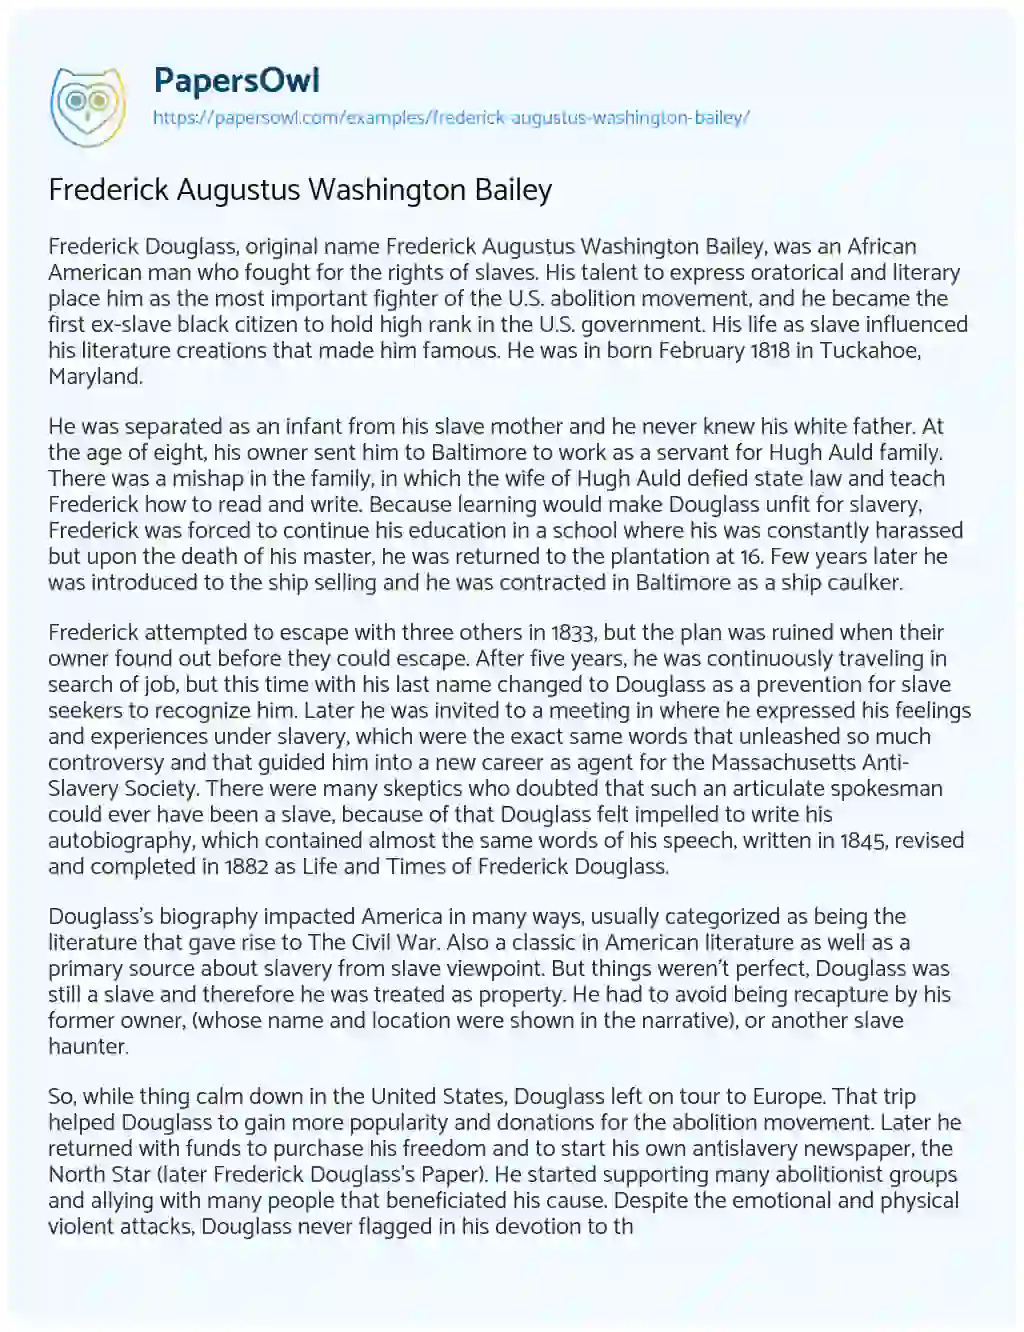 Essay on Frederick Augustus Washington Bailey